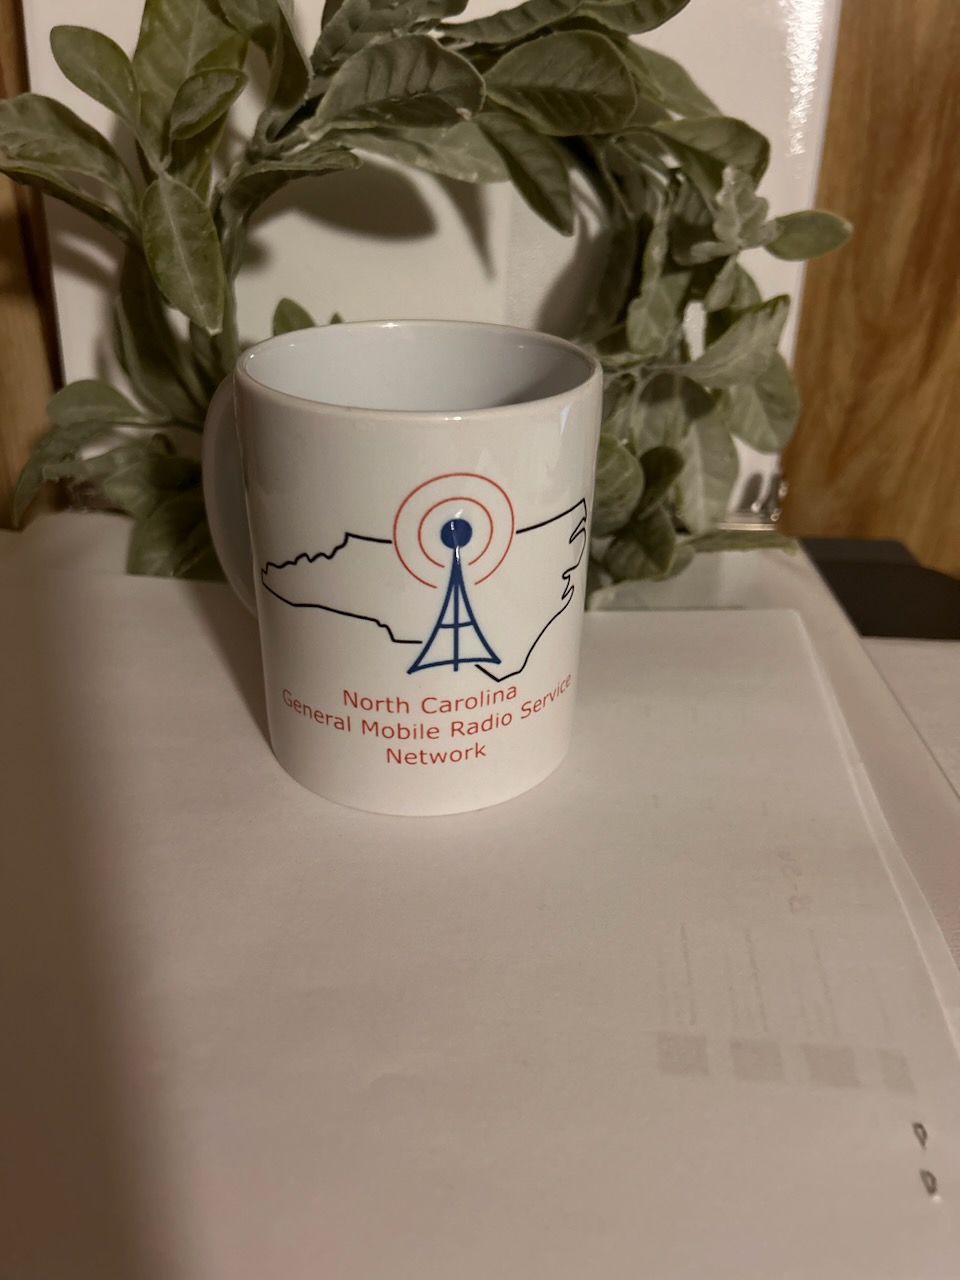 NC GMRS Network Coffie Mug